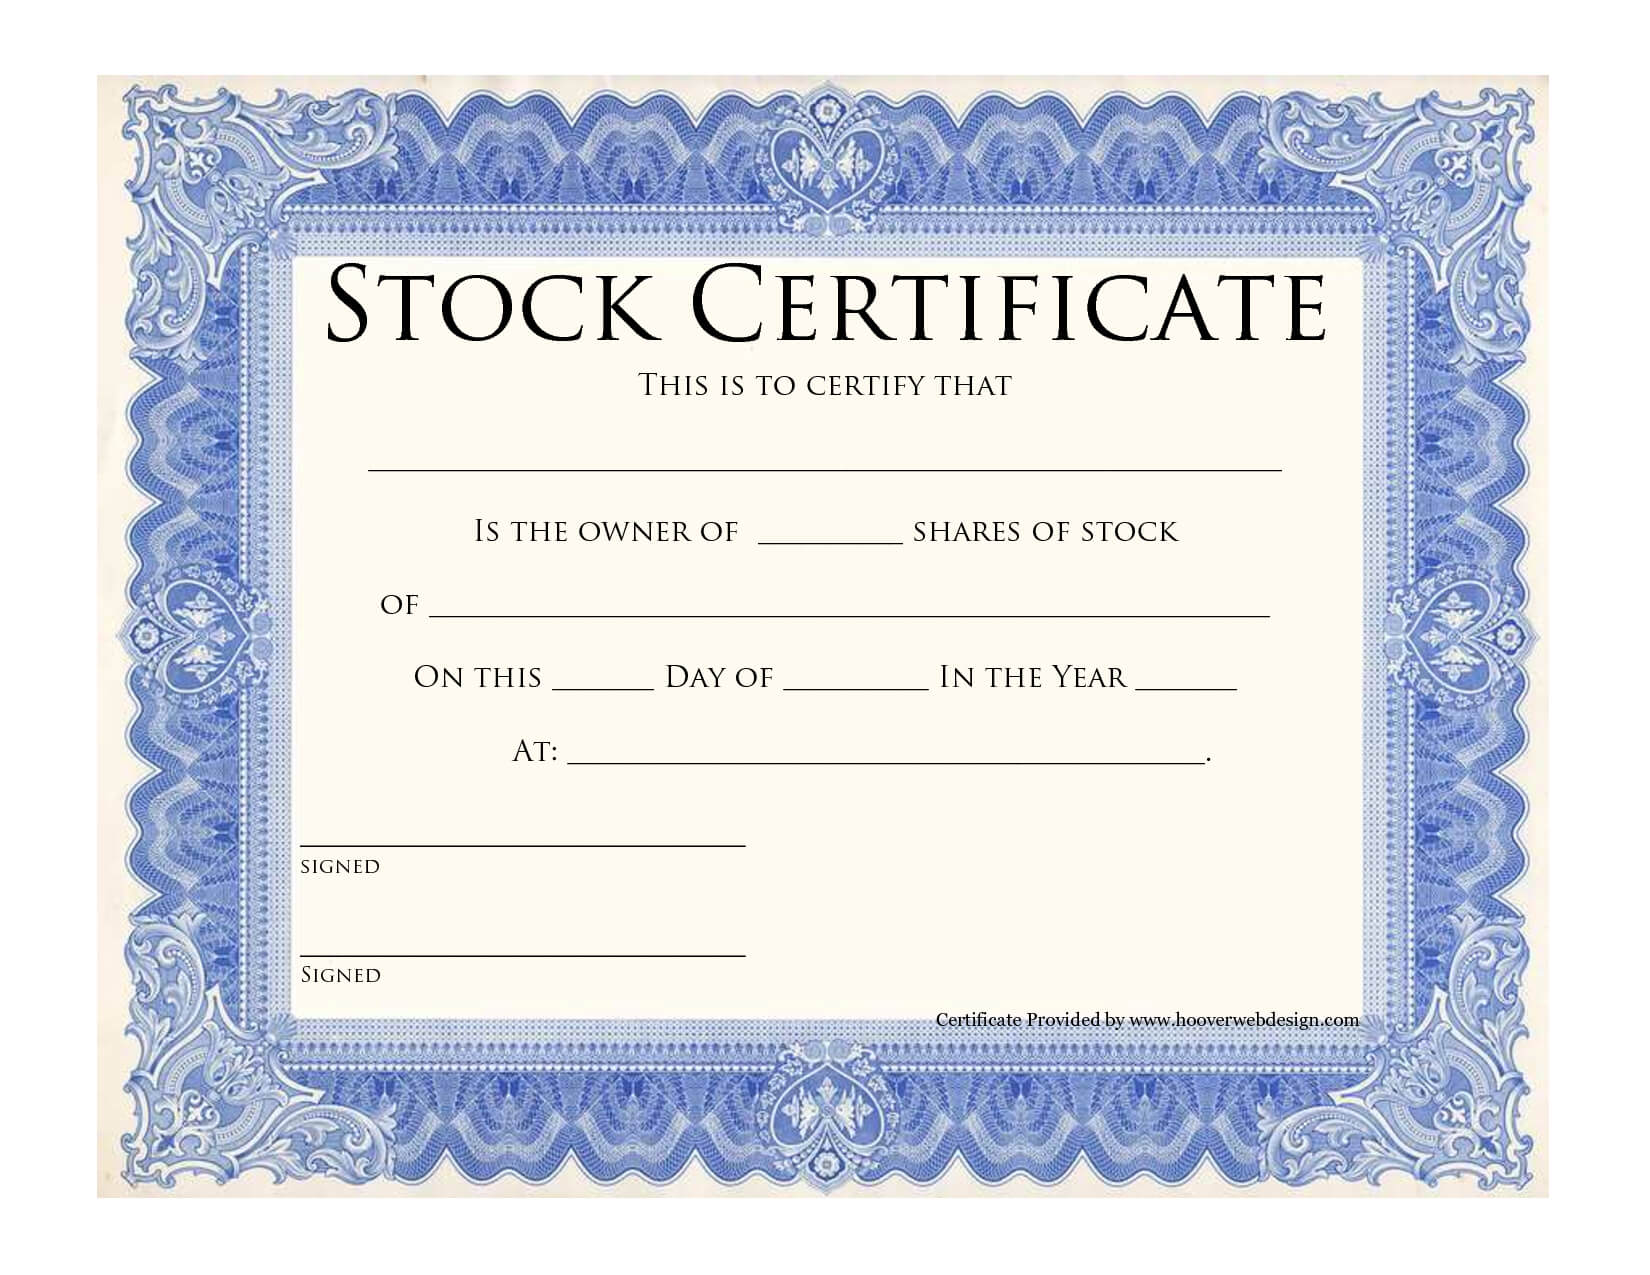 Blank Stock Certificate Template | Printable Stock Regarding Share Certificate Template Pdf